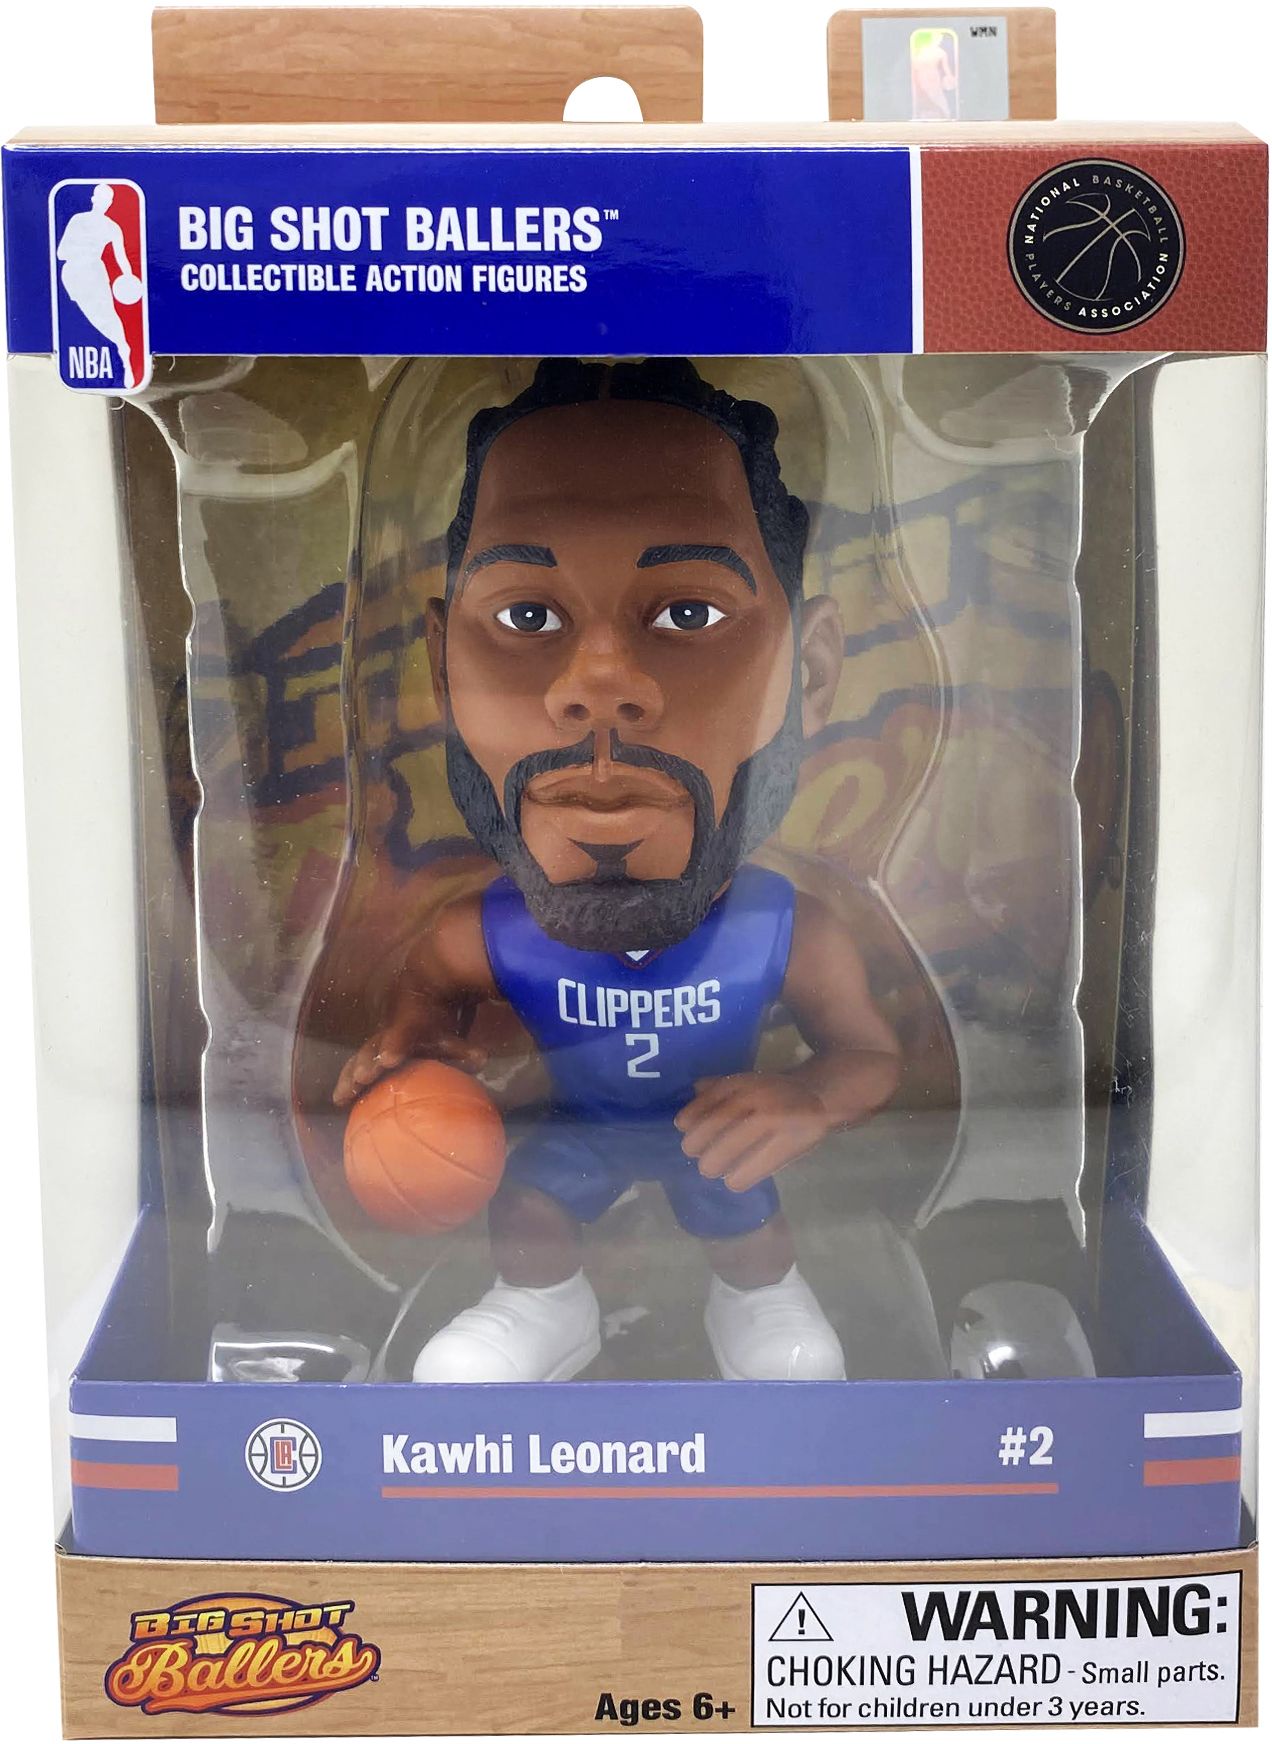 Party Animal NBA Big Shot Ballers Kawhi Leonard Mini-Figurine